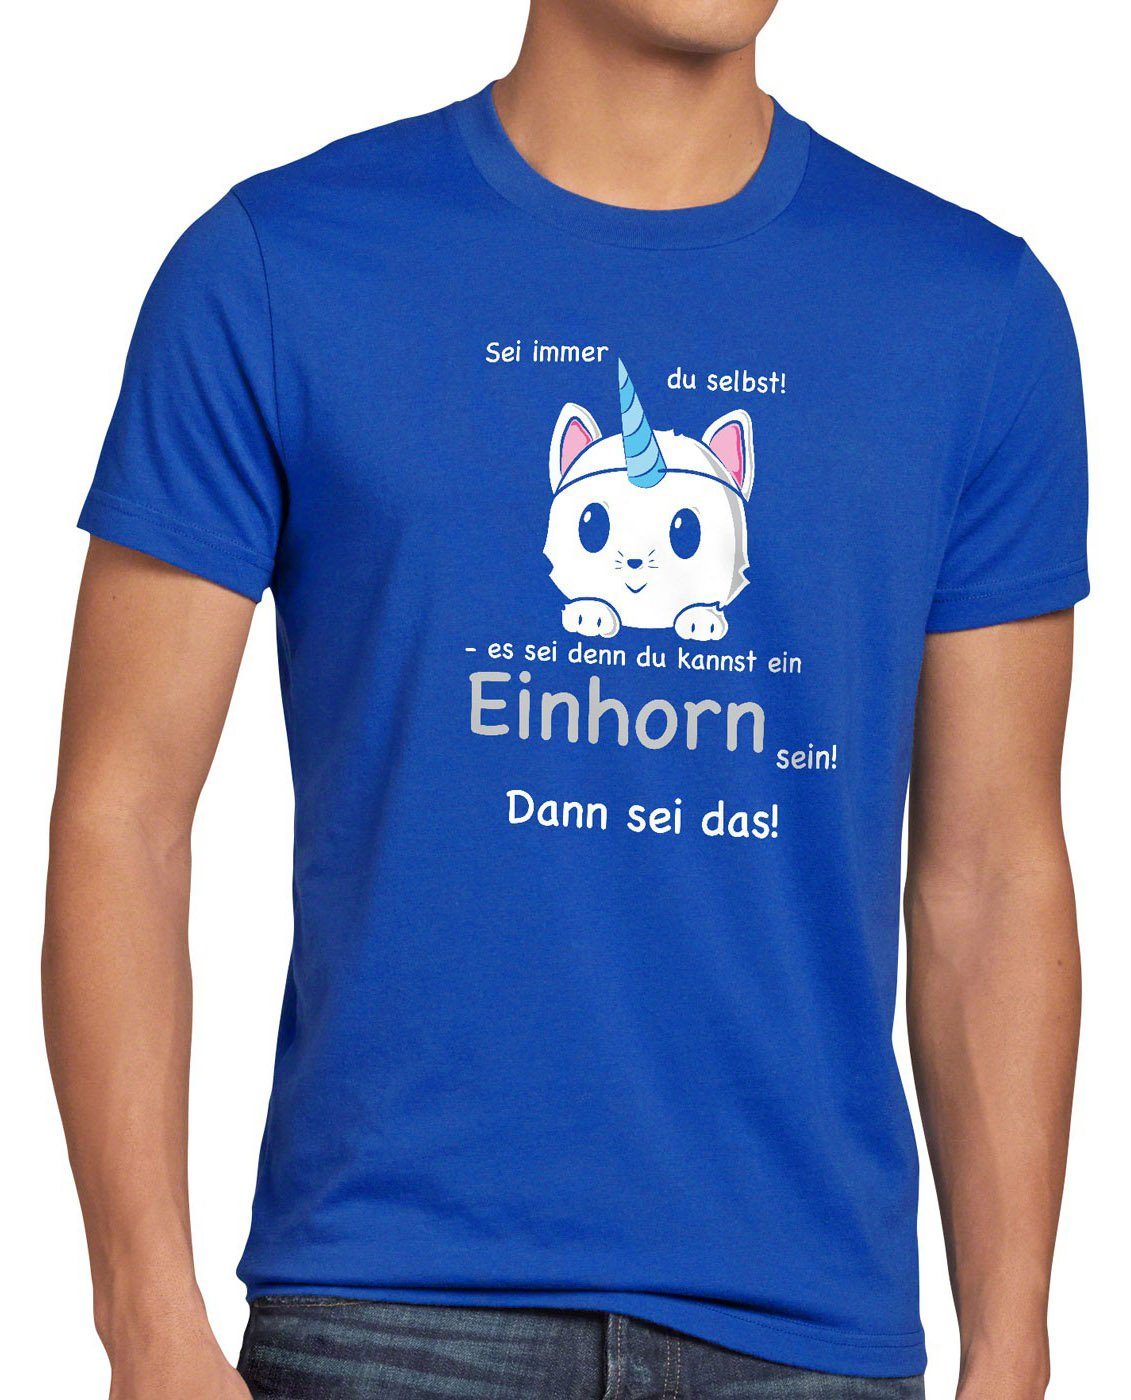 style3 Print-Shirt T-Shirt immer Fun Herren blau Unicorn du Sei denn sei Einhorn Katze Spruch es selbst!